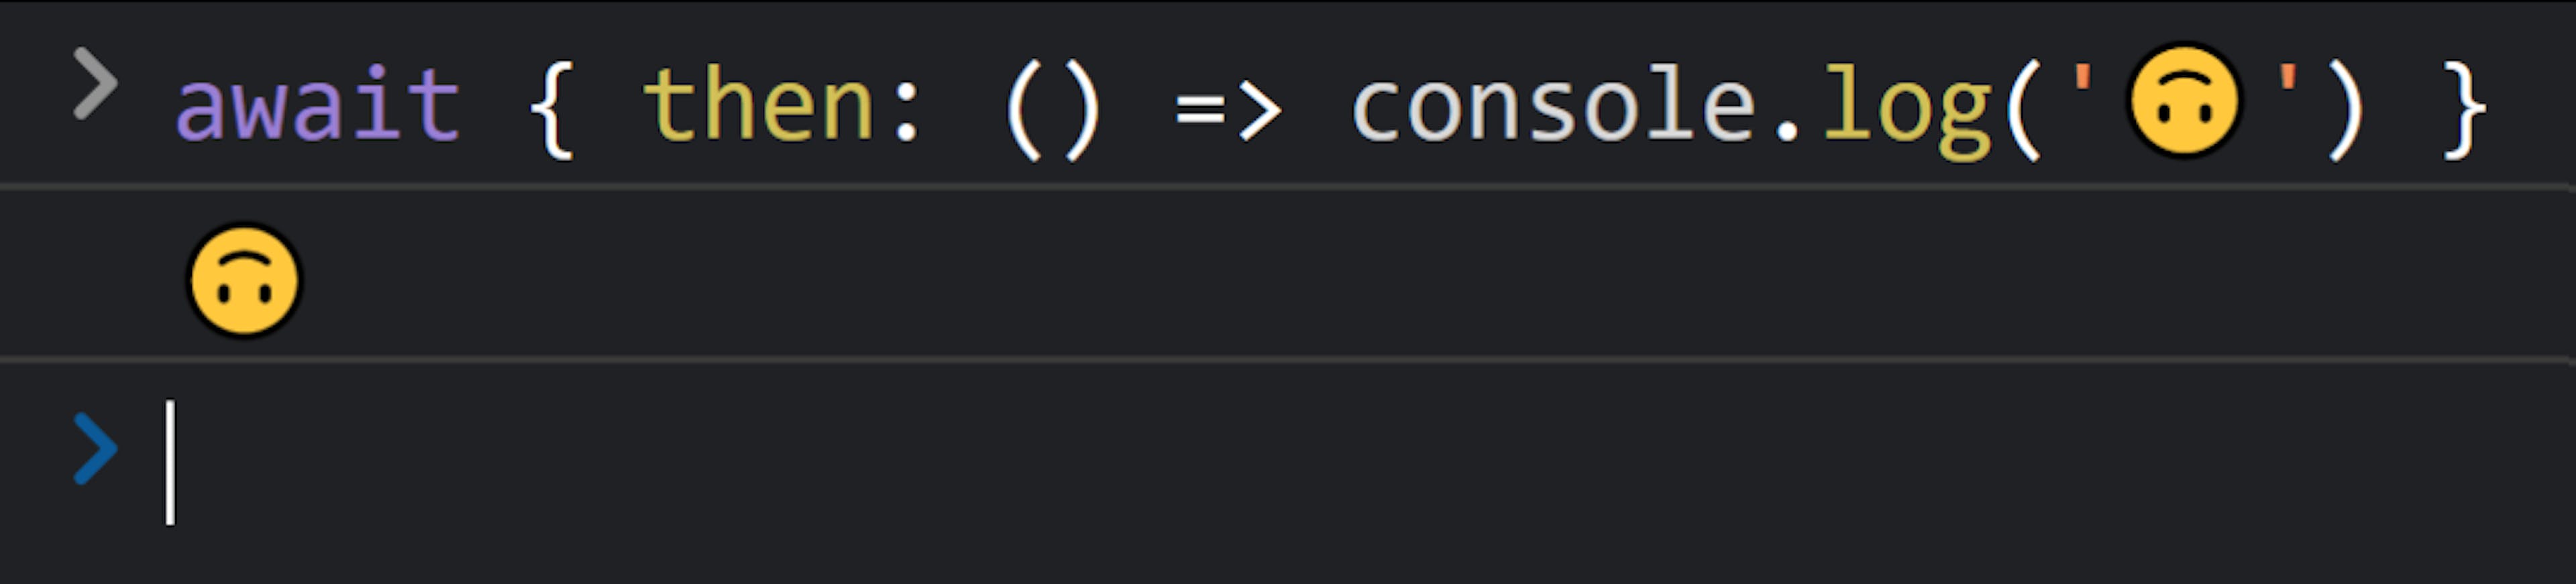 Consola de JavaScript con el texto "await { then: () => console.log('🙃') }" seguido de "🙃".